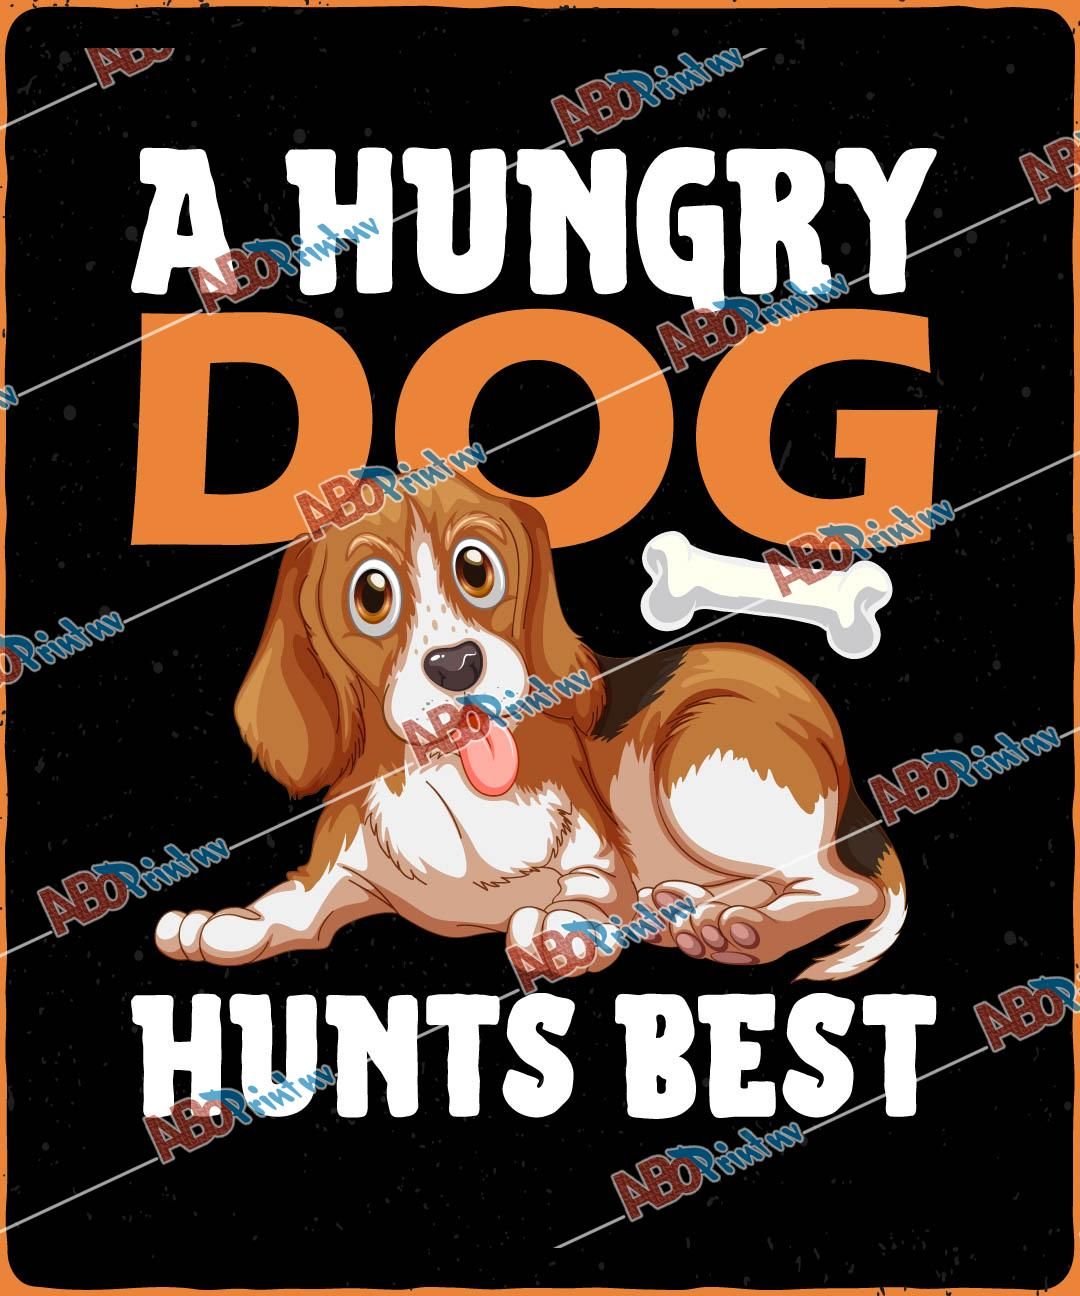 A hungry dog hunts bestJPG (1).jpg